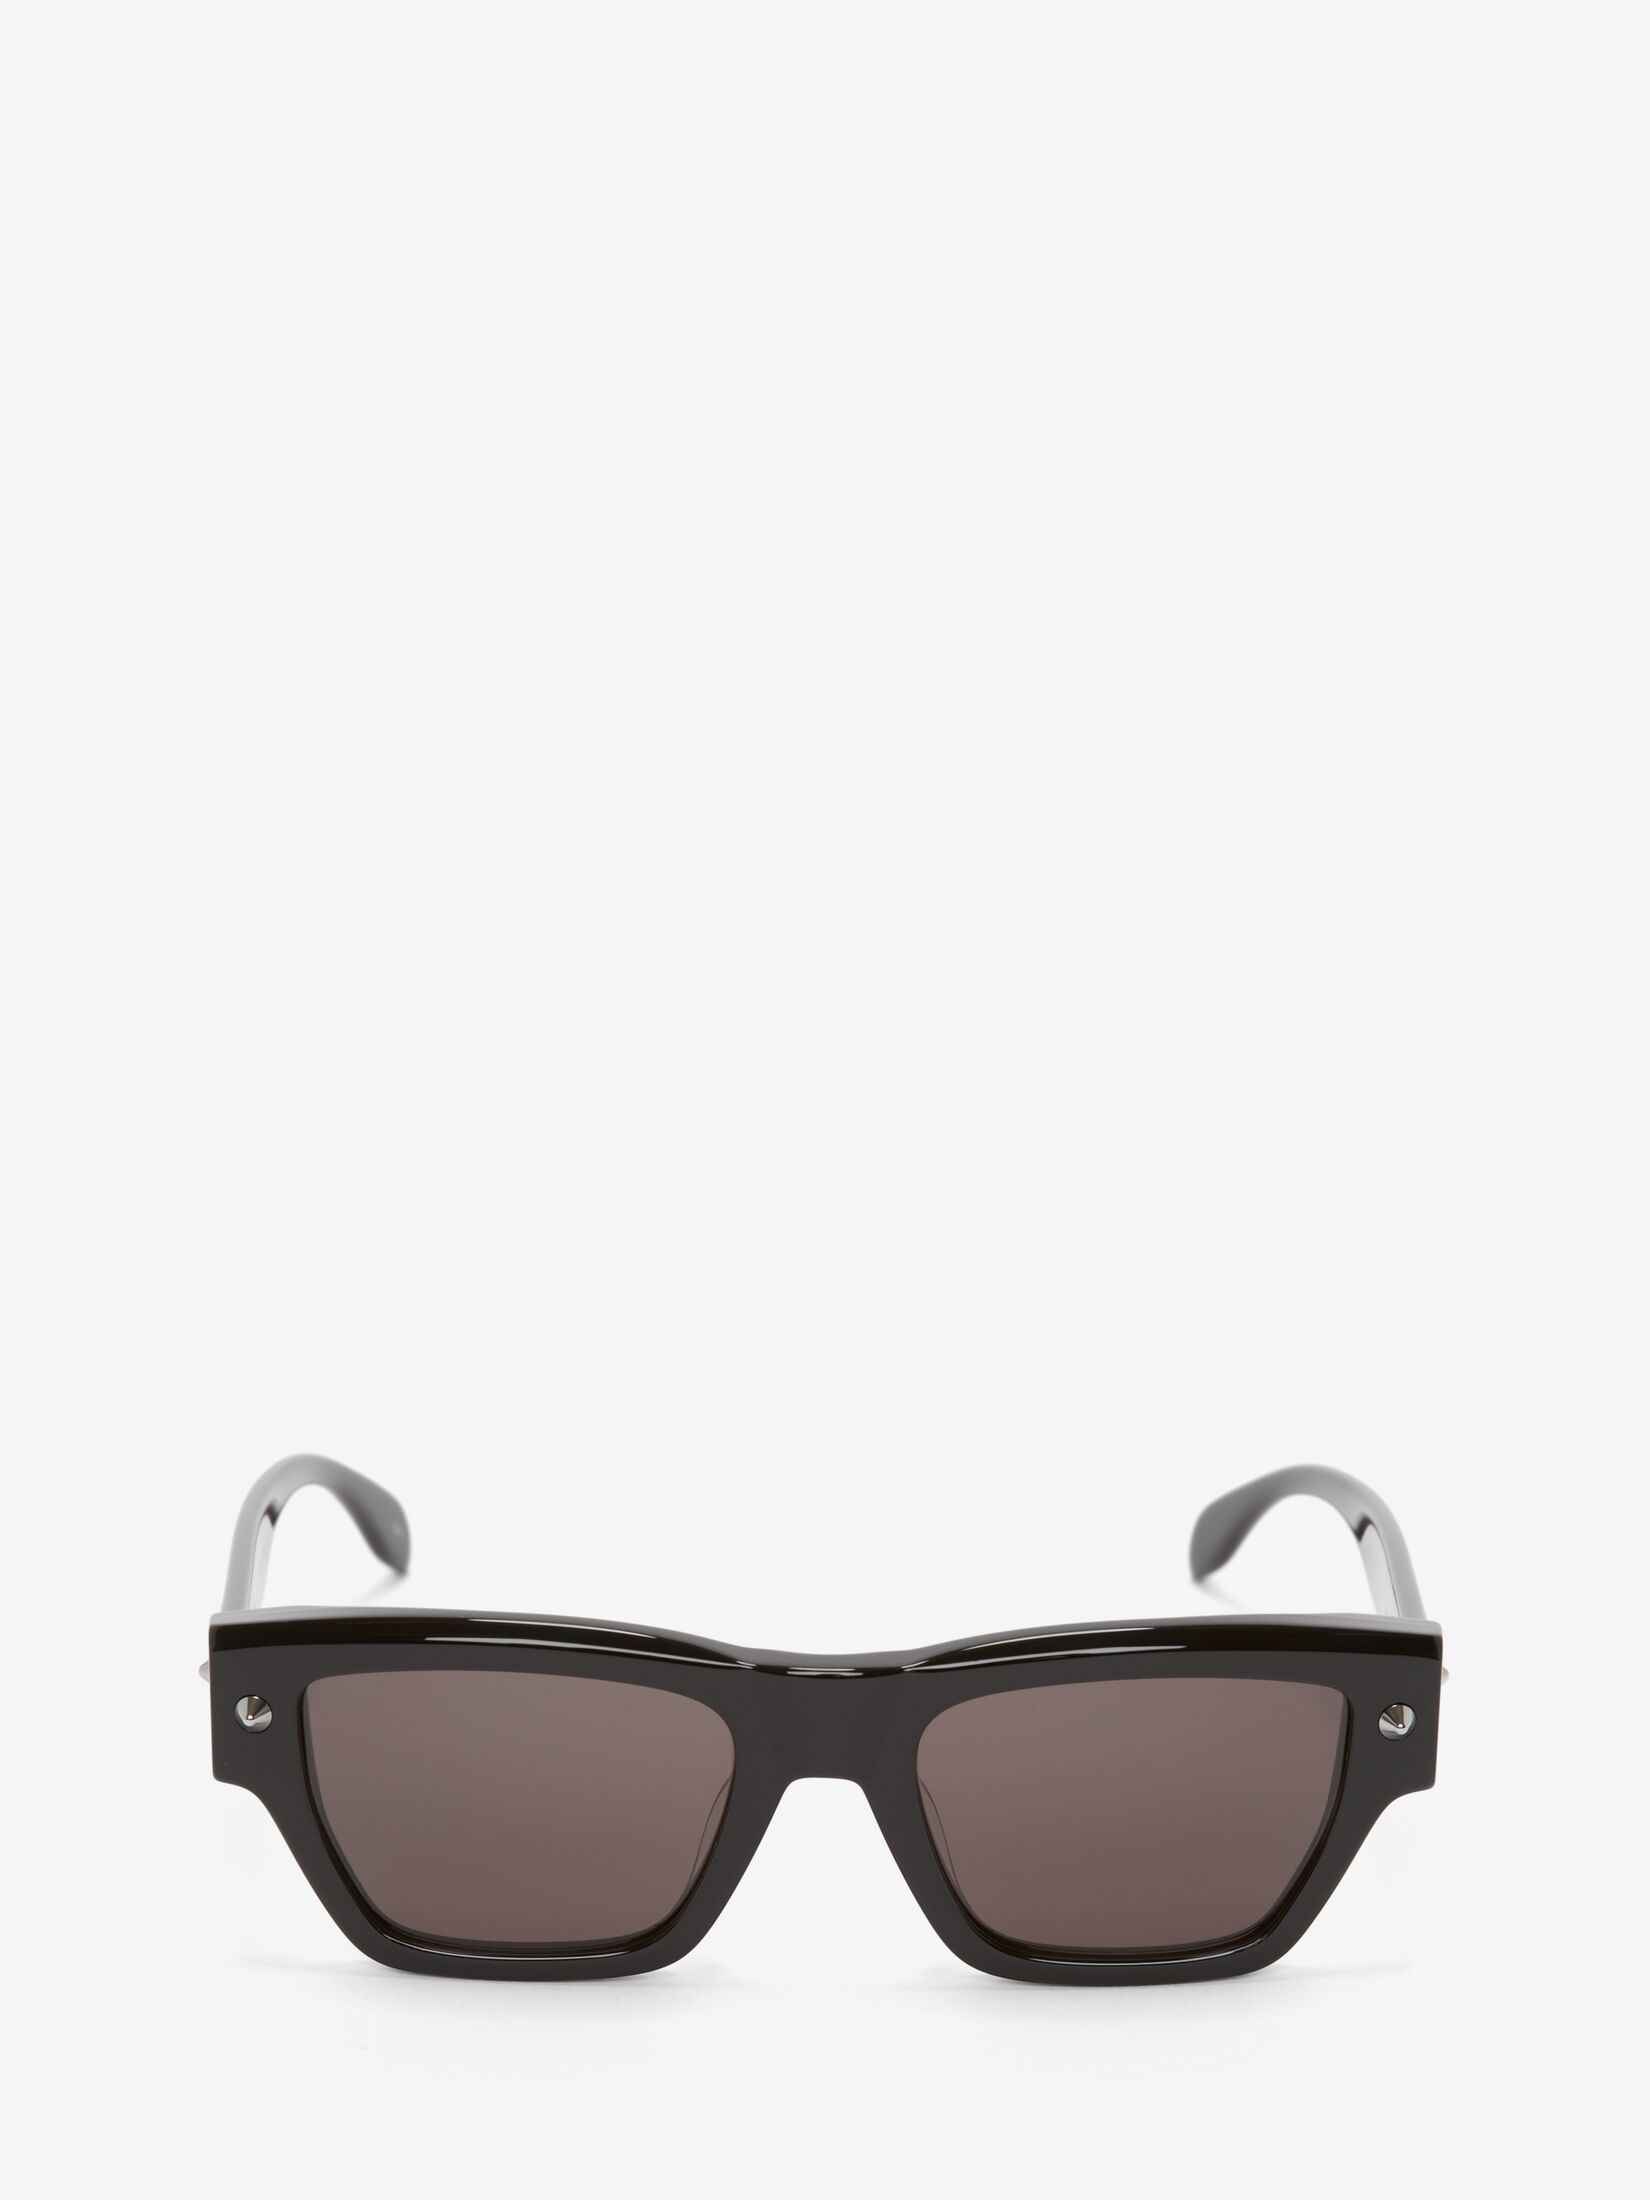 Men's Spike Studs Rectangular Sunglasses in Black/smoke - 1